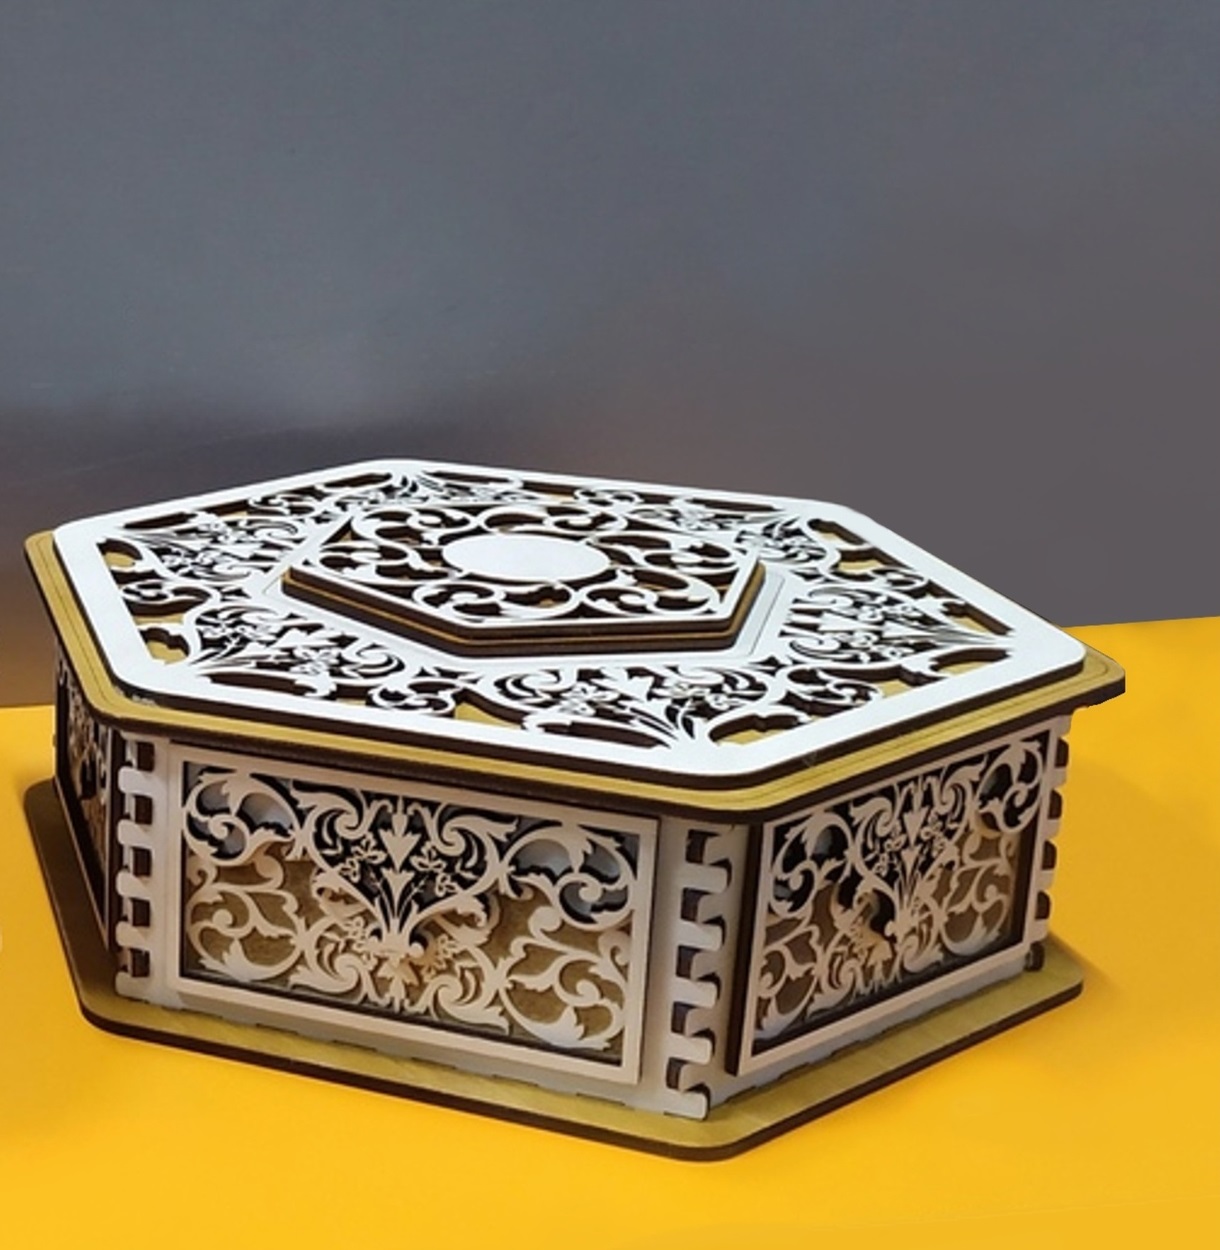 Decorative Hexagonal Gift Box For Laser Cut Free CDR Vectors Art